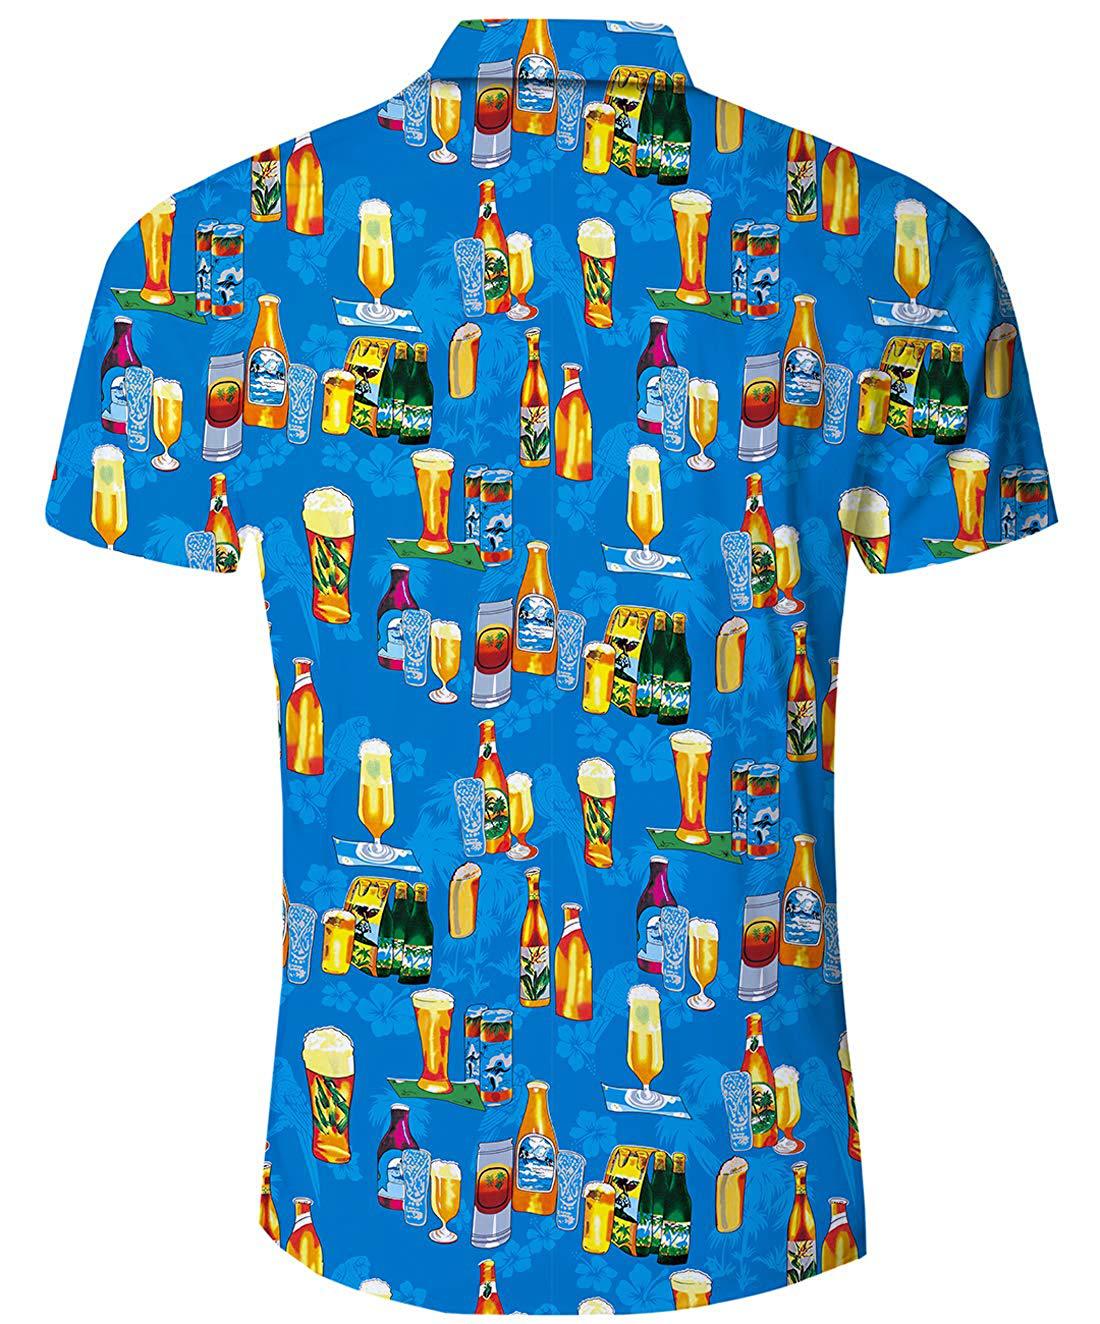 Men's Short Sleeve Casual Beer Bottle All - Over Printed Shirt